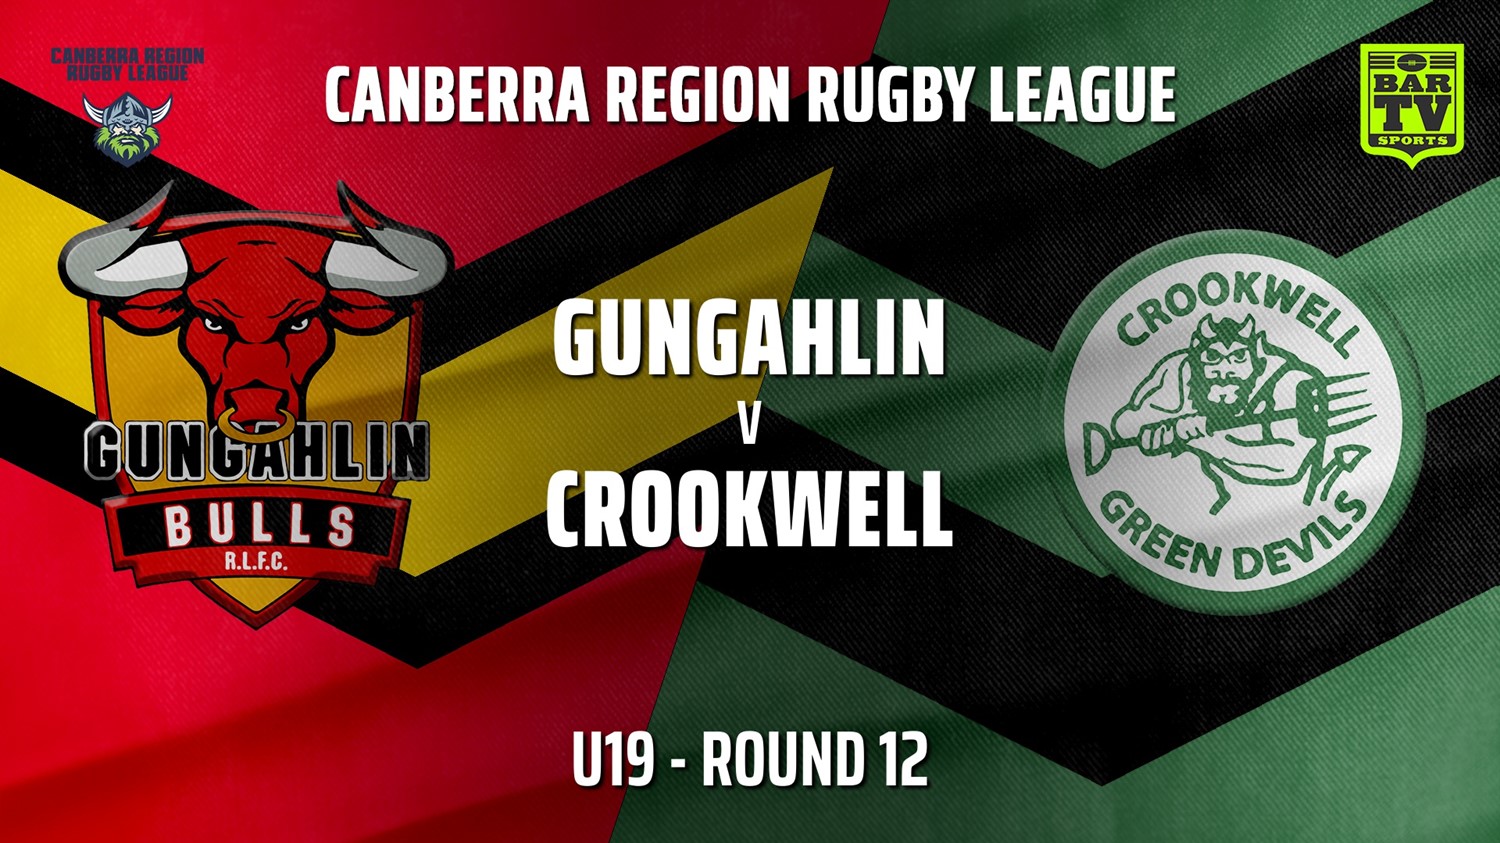 210808-Canberra Round 12 - U19 - Gungahlin Bulls v Crookwell Green Devils Slate Image